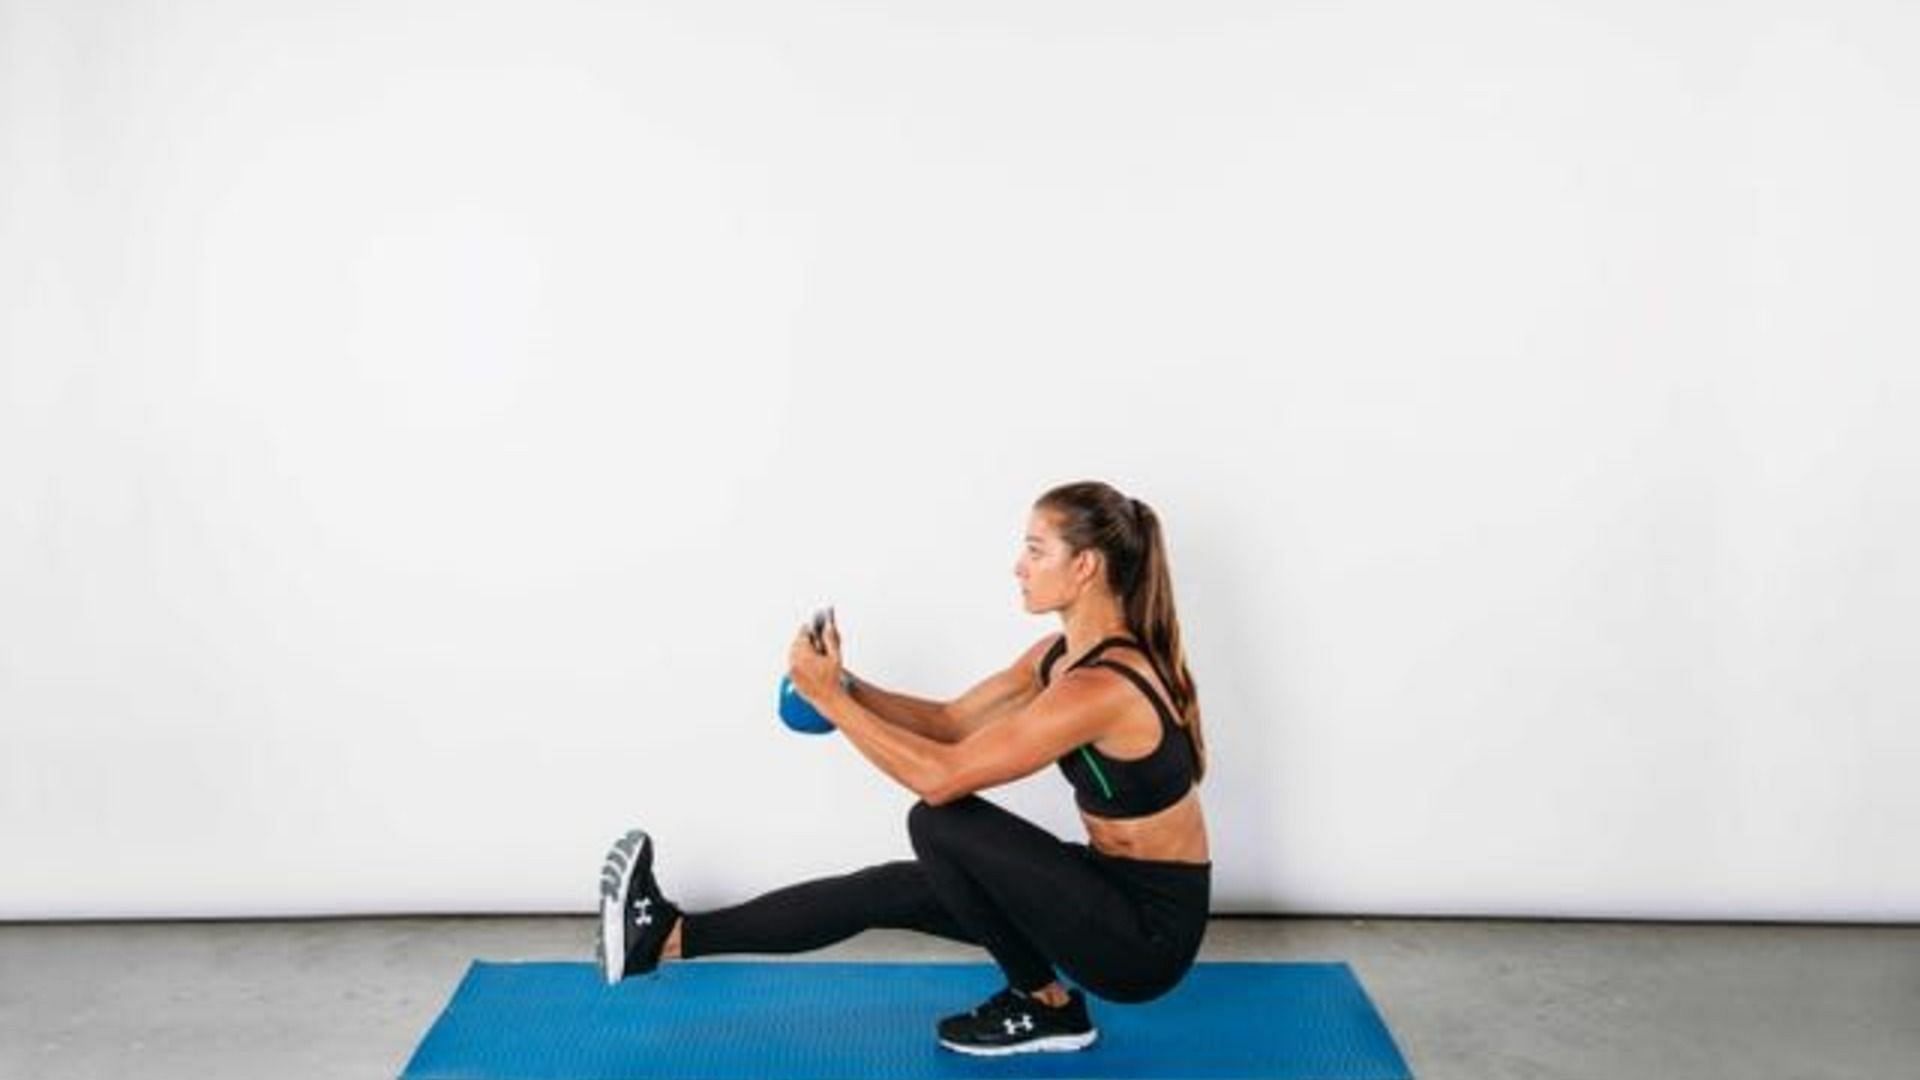 How to perform the single-leg squat exercise. (Image via Pinterest)